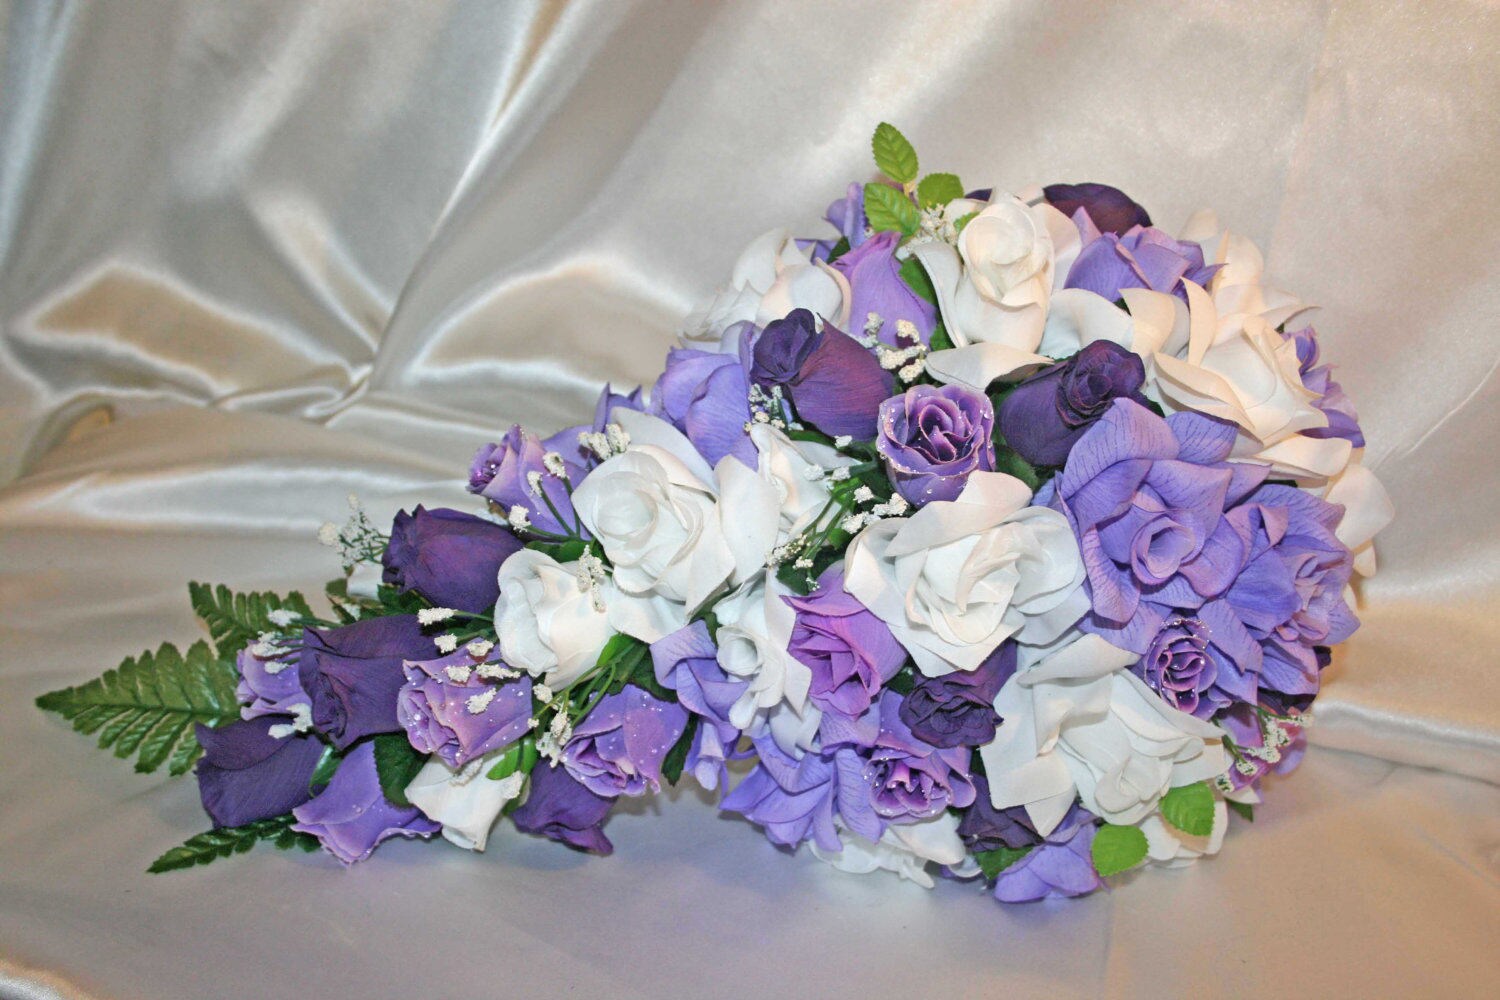 purple white wedding dress